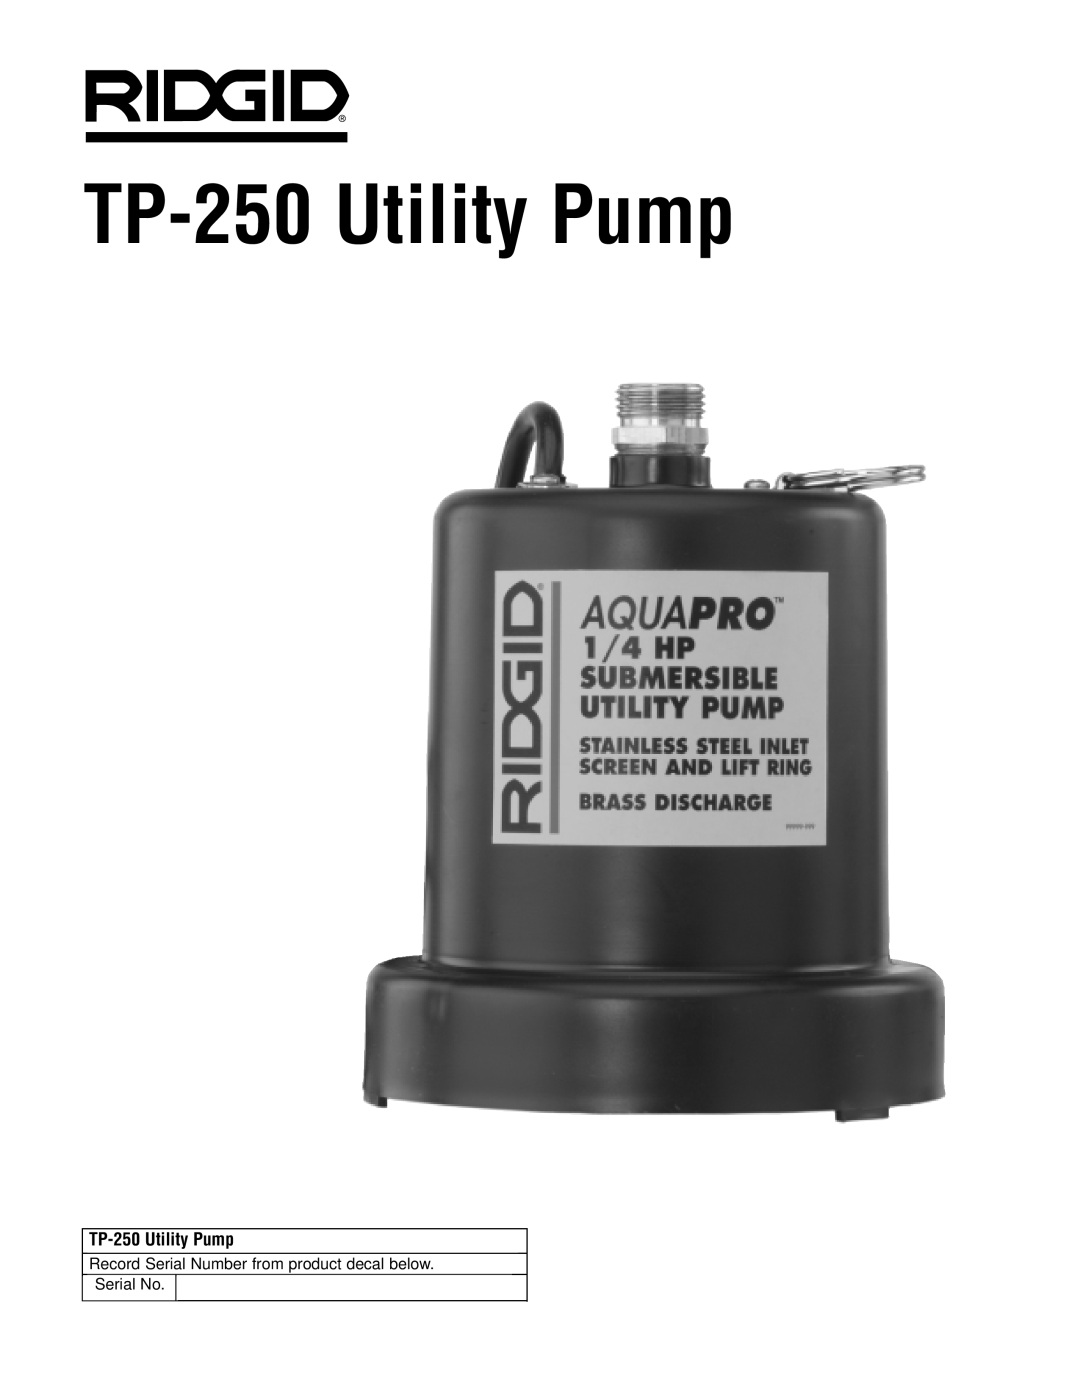 RIDGID manual TP-250Utility Pump 